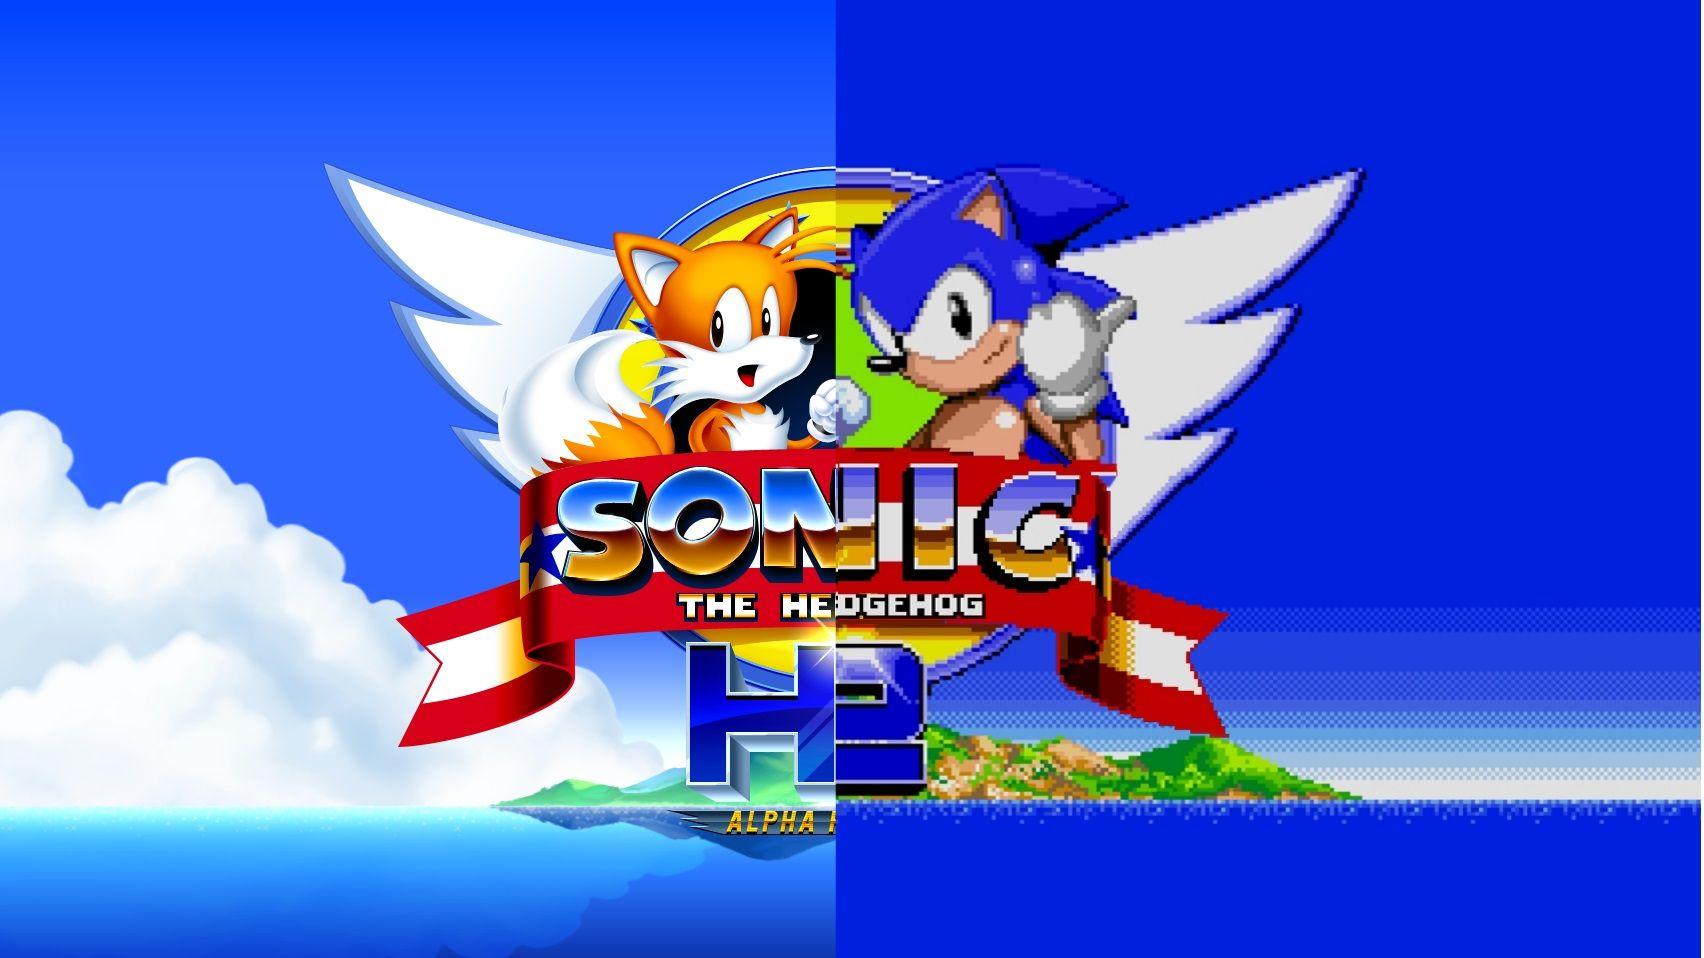 Sonic the hedgehog 2 HD wallpapers  Pxfuel